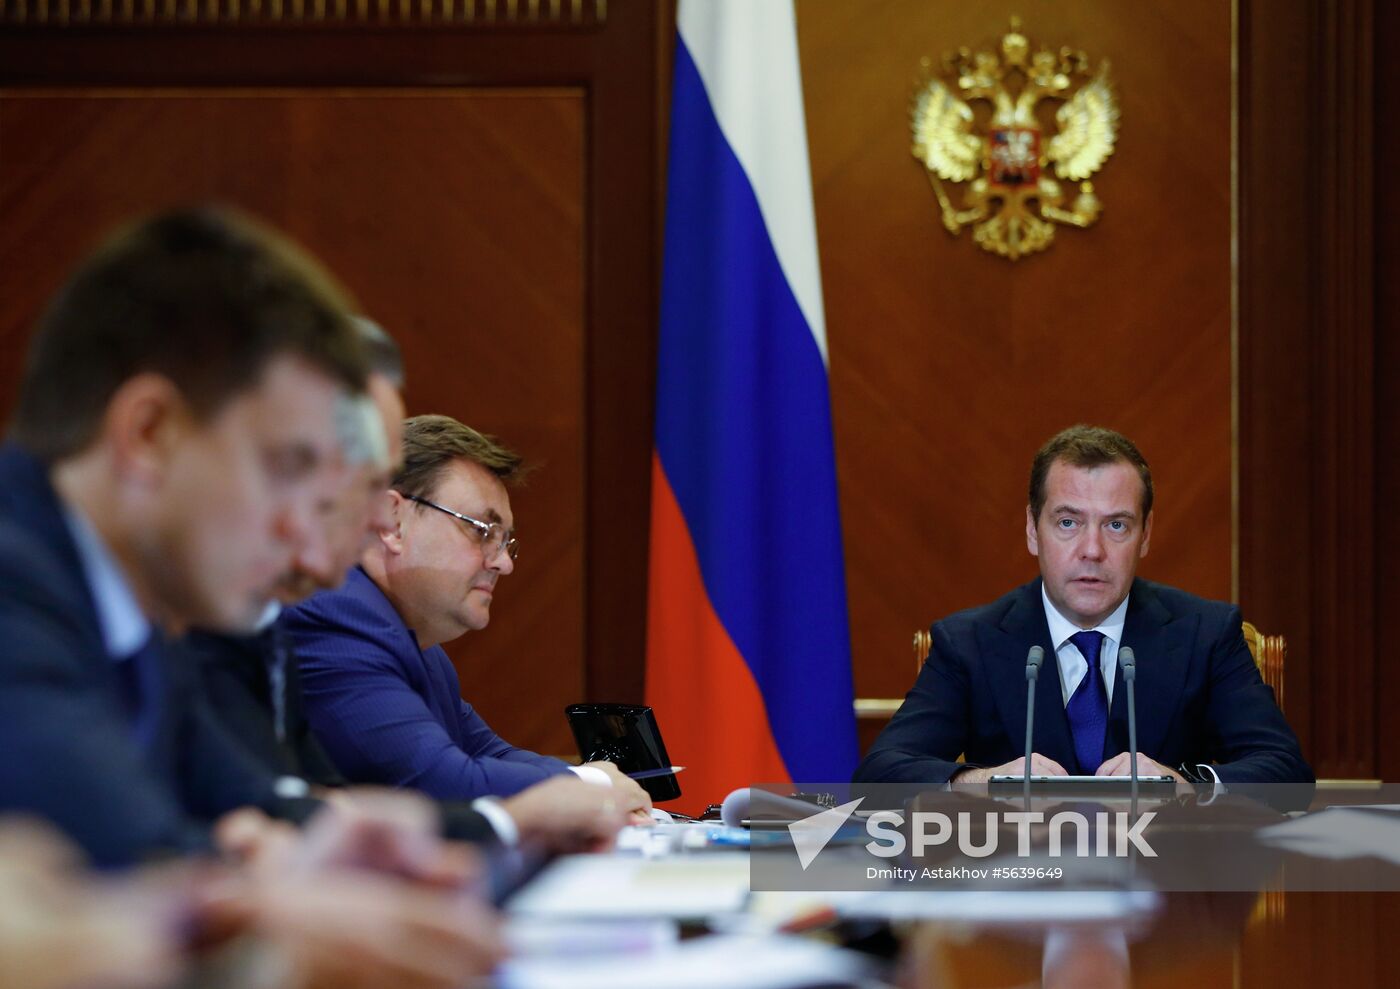 Prime Minister Dmitry Medvedev chairs meeting of Presidium of Presidential Council for Strategic Development